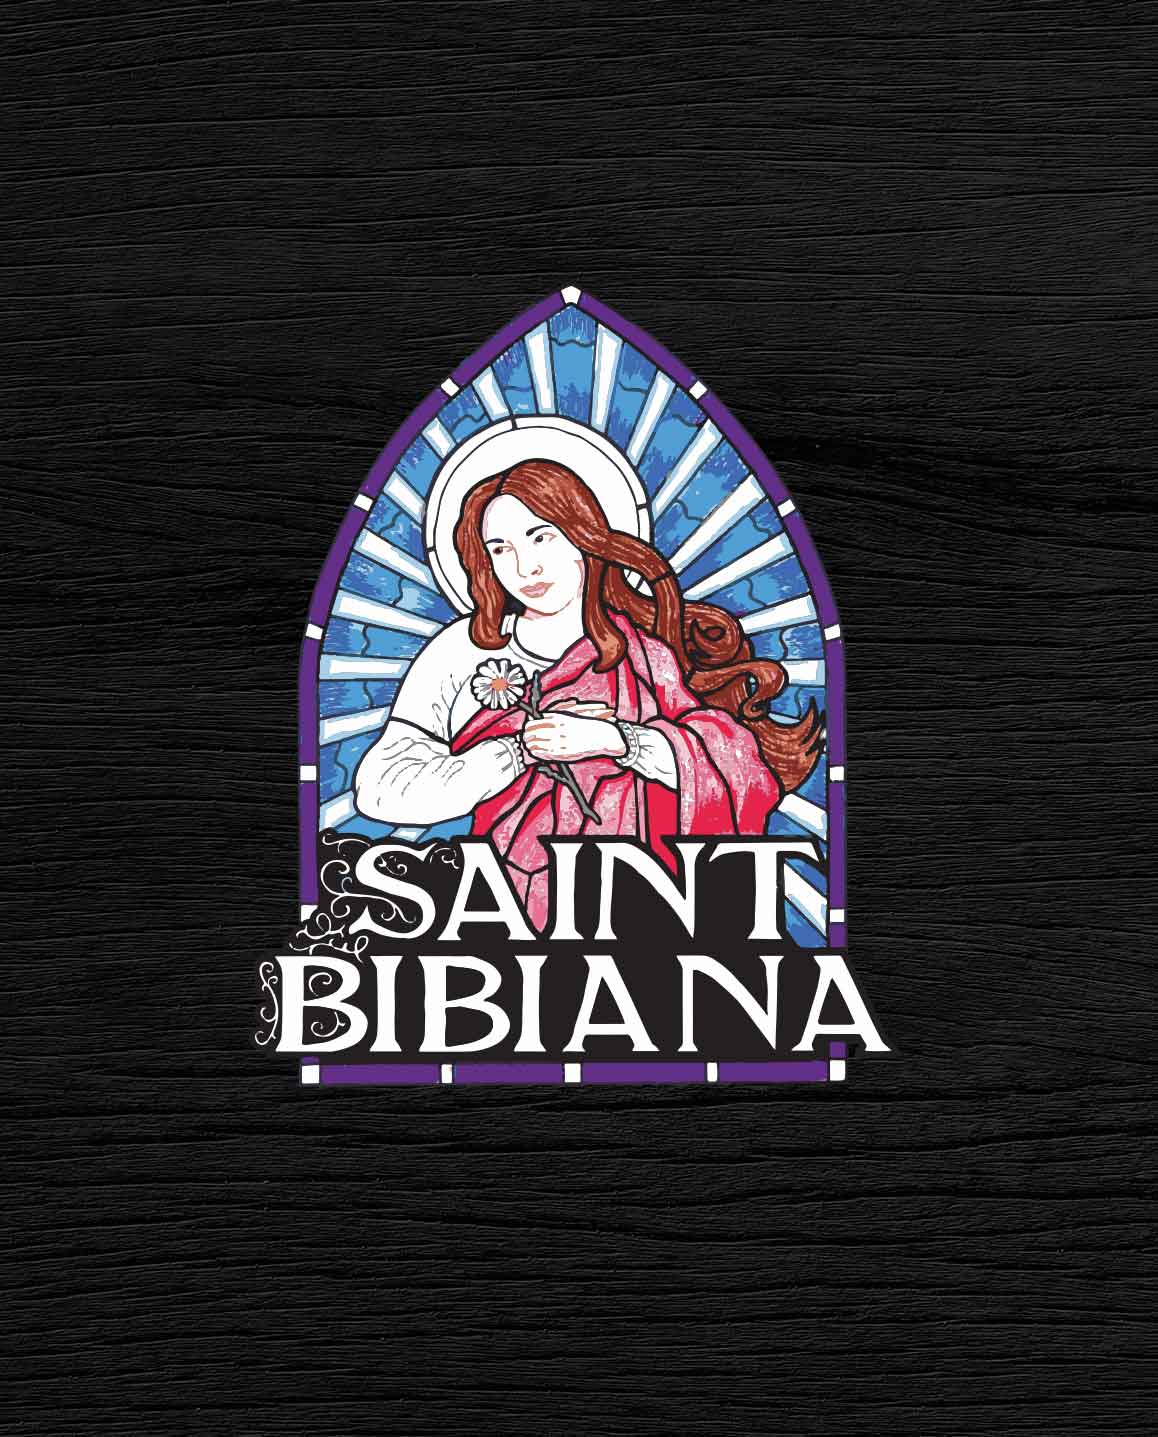 Saint Bibiana Coming Soon to Brady Street | Saint Bibiana